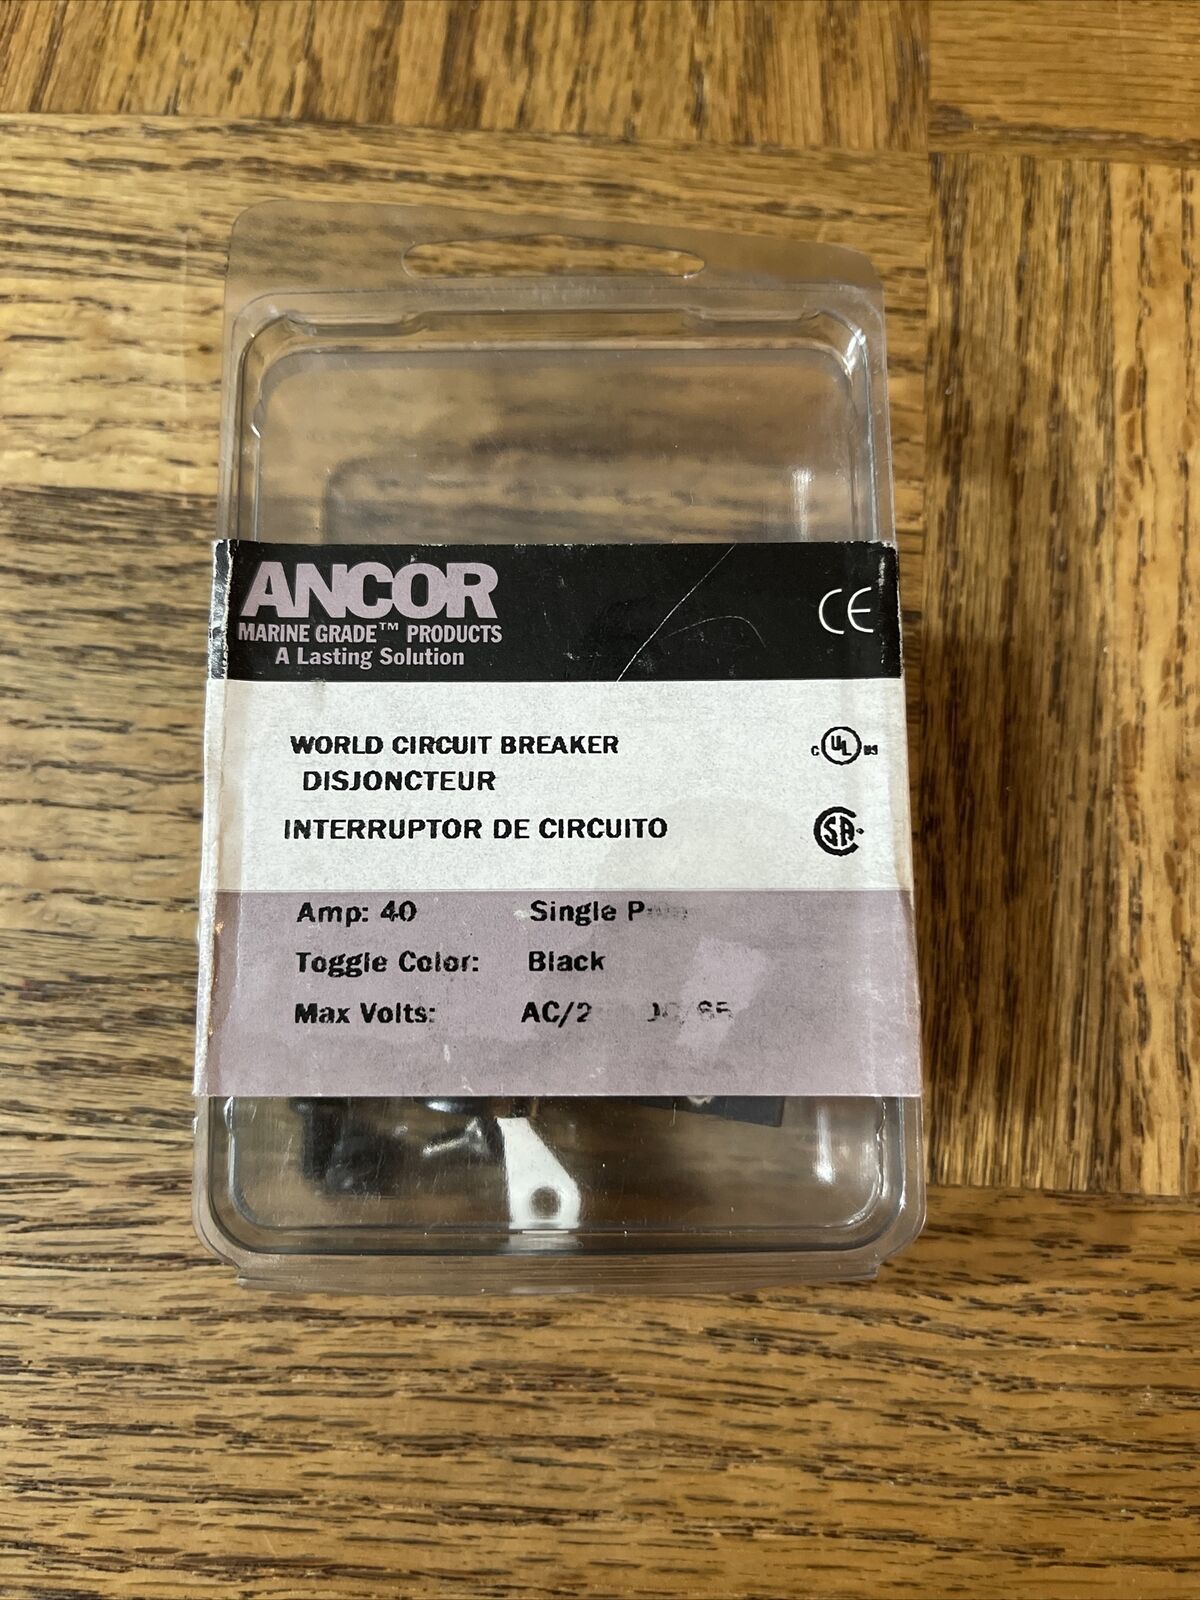 Ancor World Circuit Breaker 40 AMP - $49.38